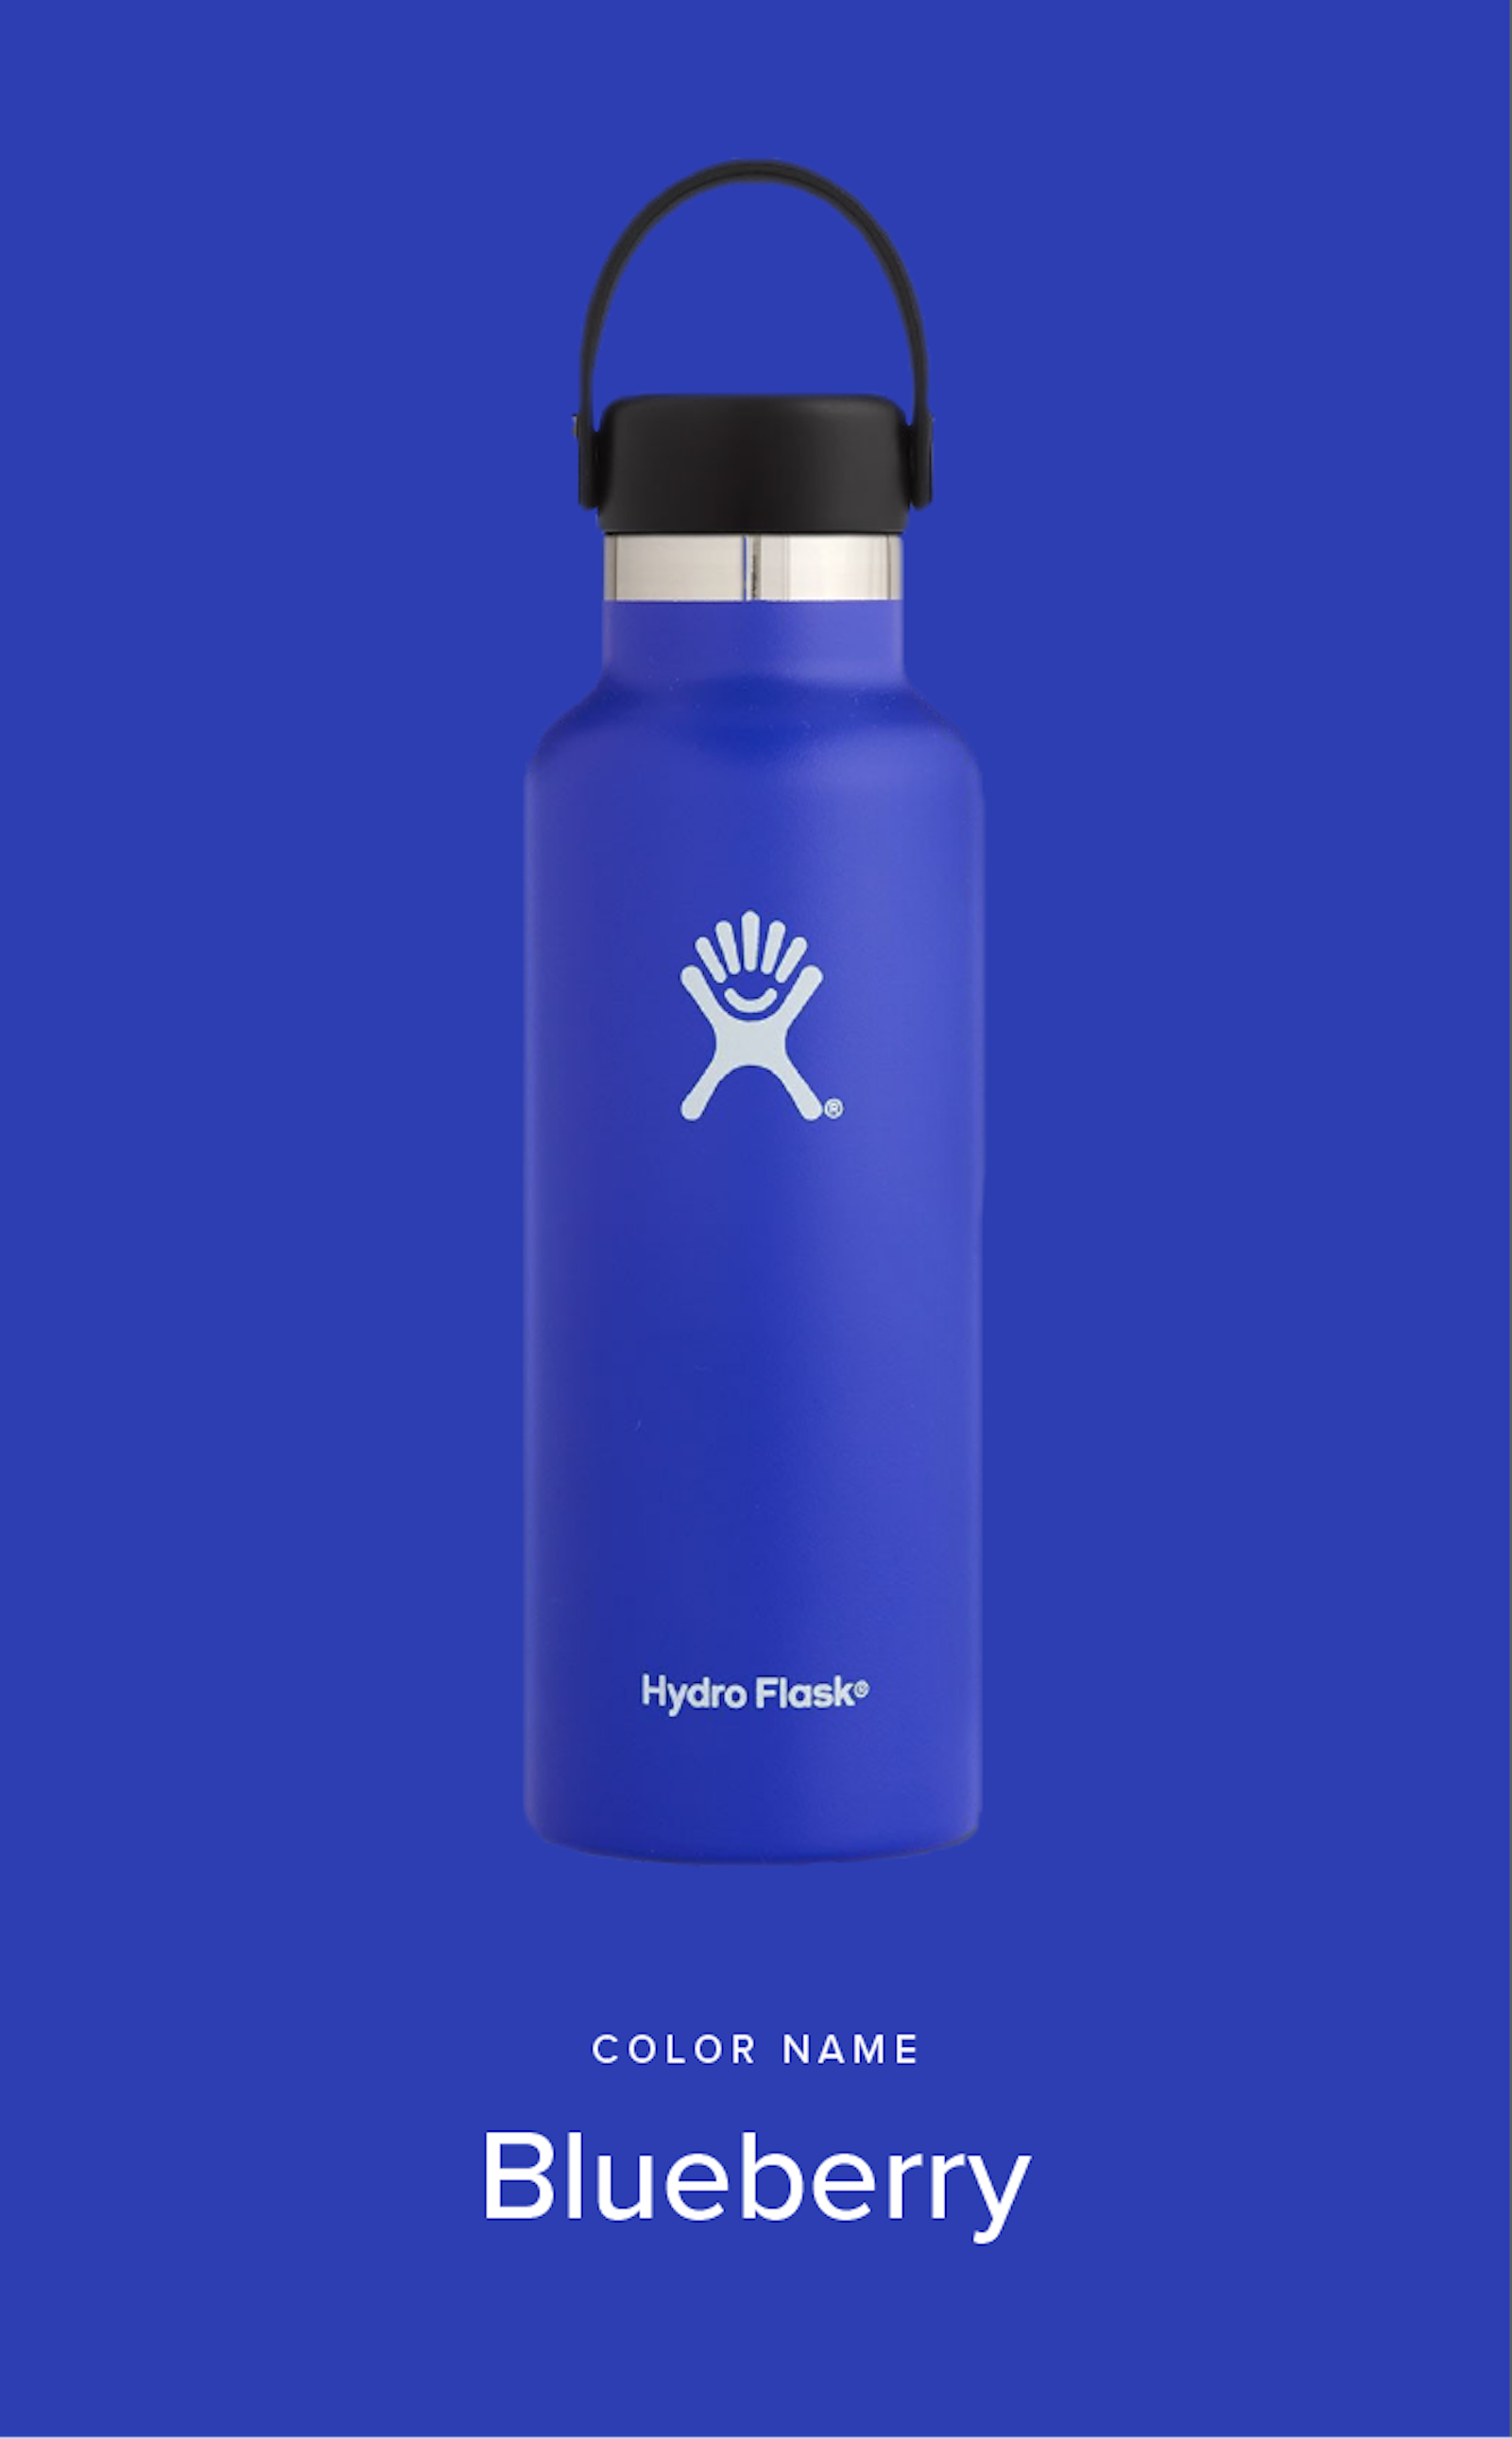 Hidro Flask Blue Berry